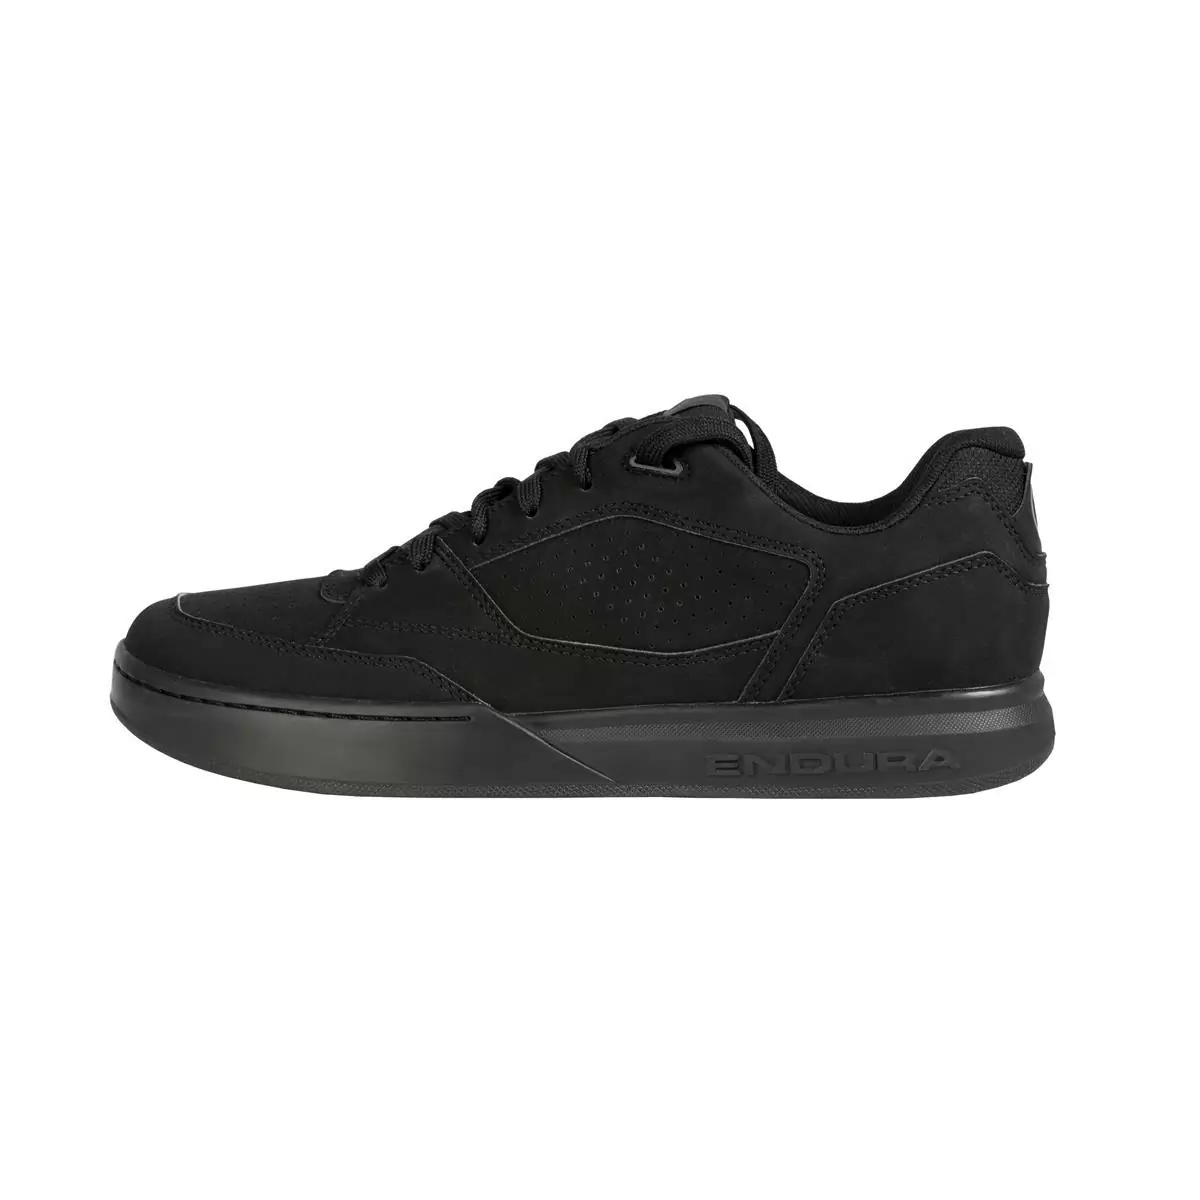 Hummvee Flat Pedal Shoes Black Size 43 #1